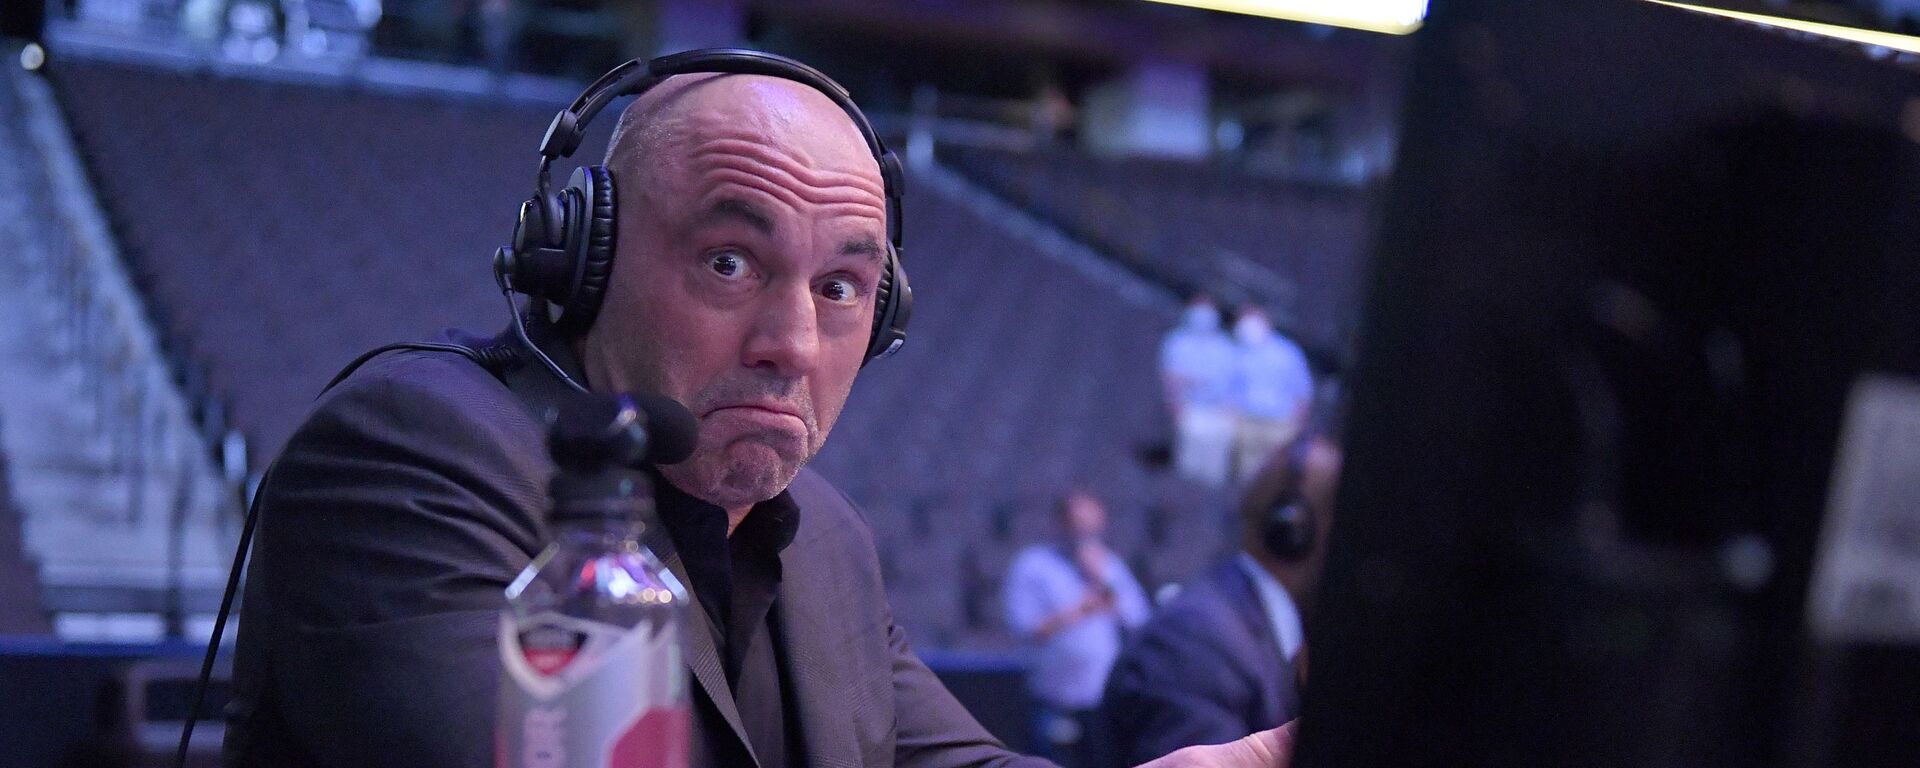 JACKSONVILLE, FLORIDA - MAY 09: Announcer Joe Rogan reacts during UFC 249 at VyStar Veterans Memorial Arena on May 09, 2020 in Jacksonville, Florida. - Sputnik International, 1920, 26.02.2022